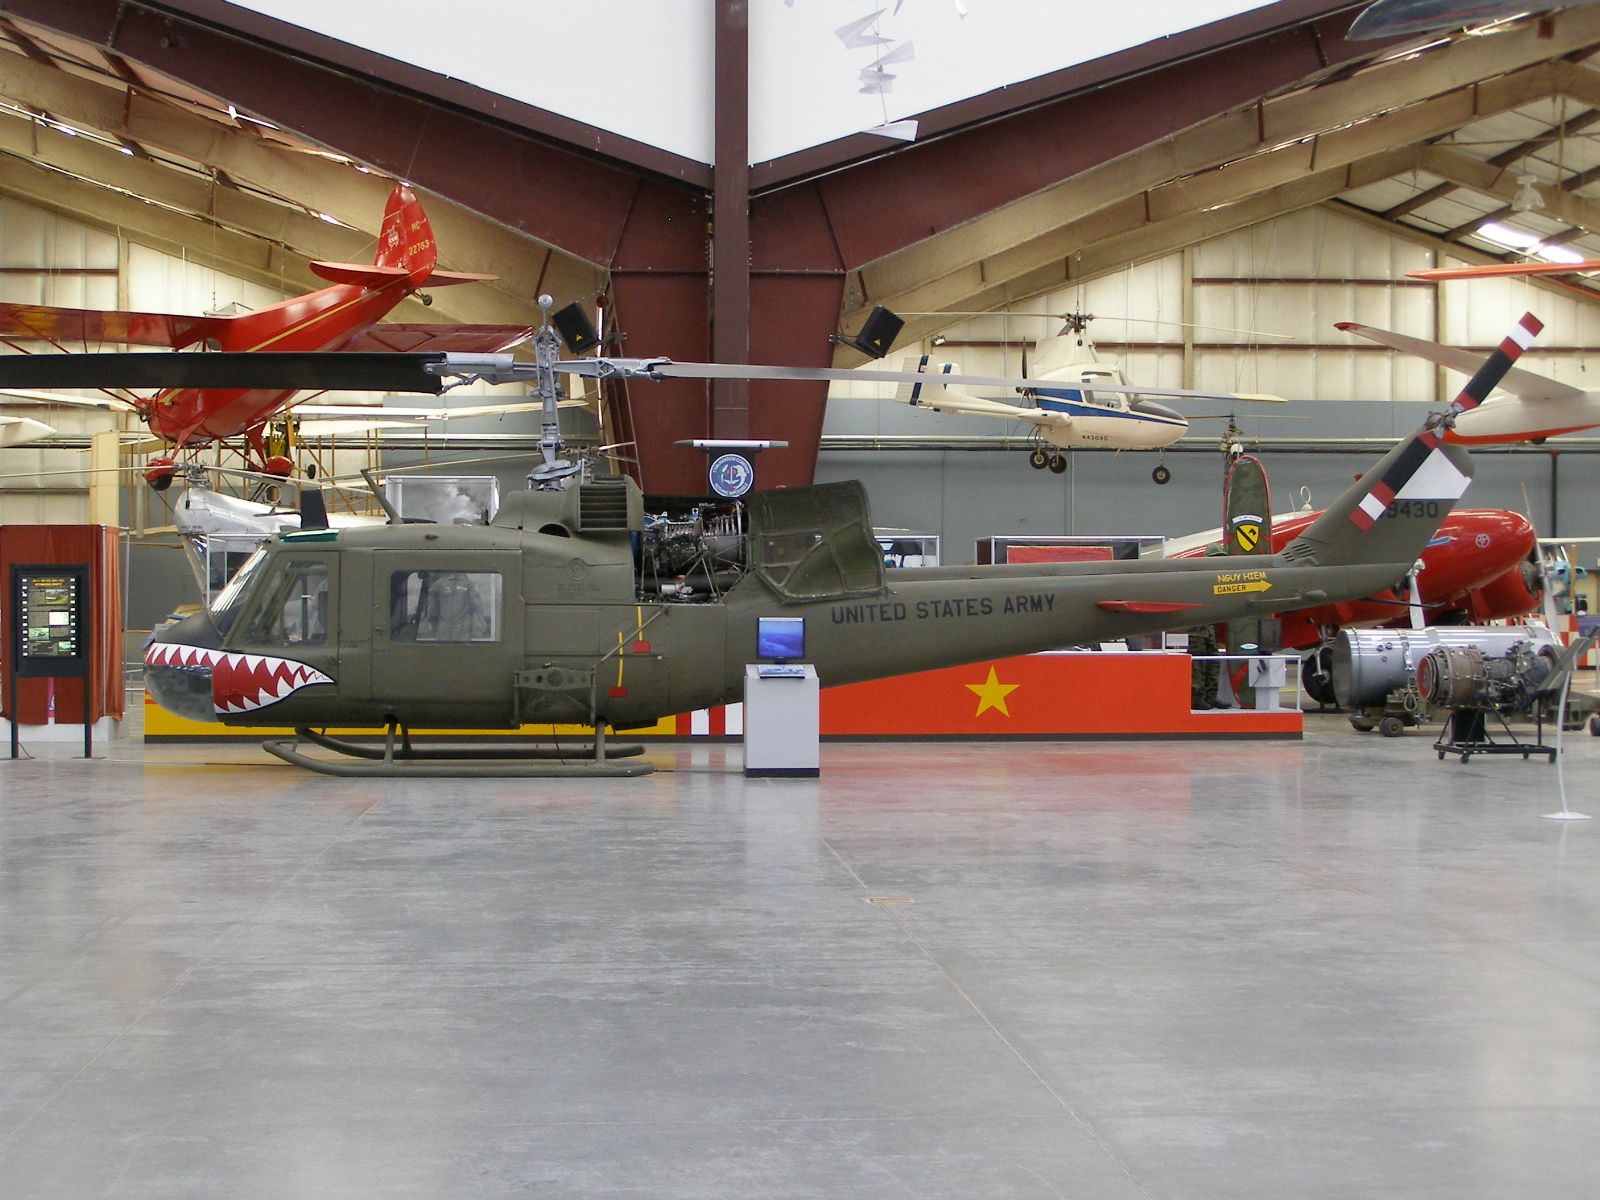 Vietnam era "Huey" chopper